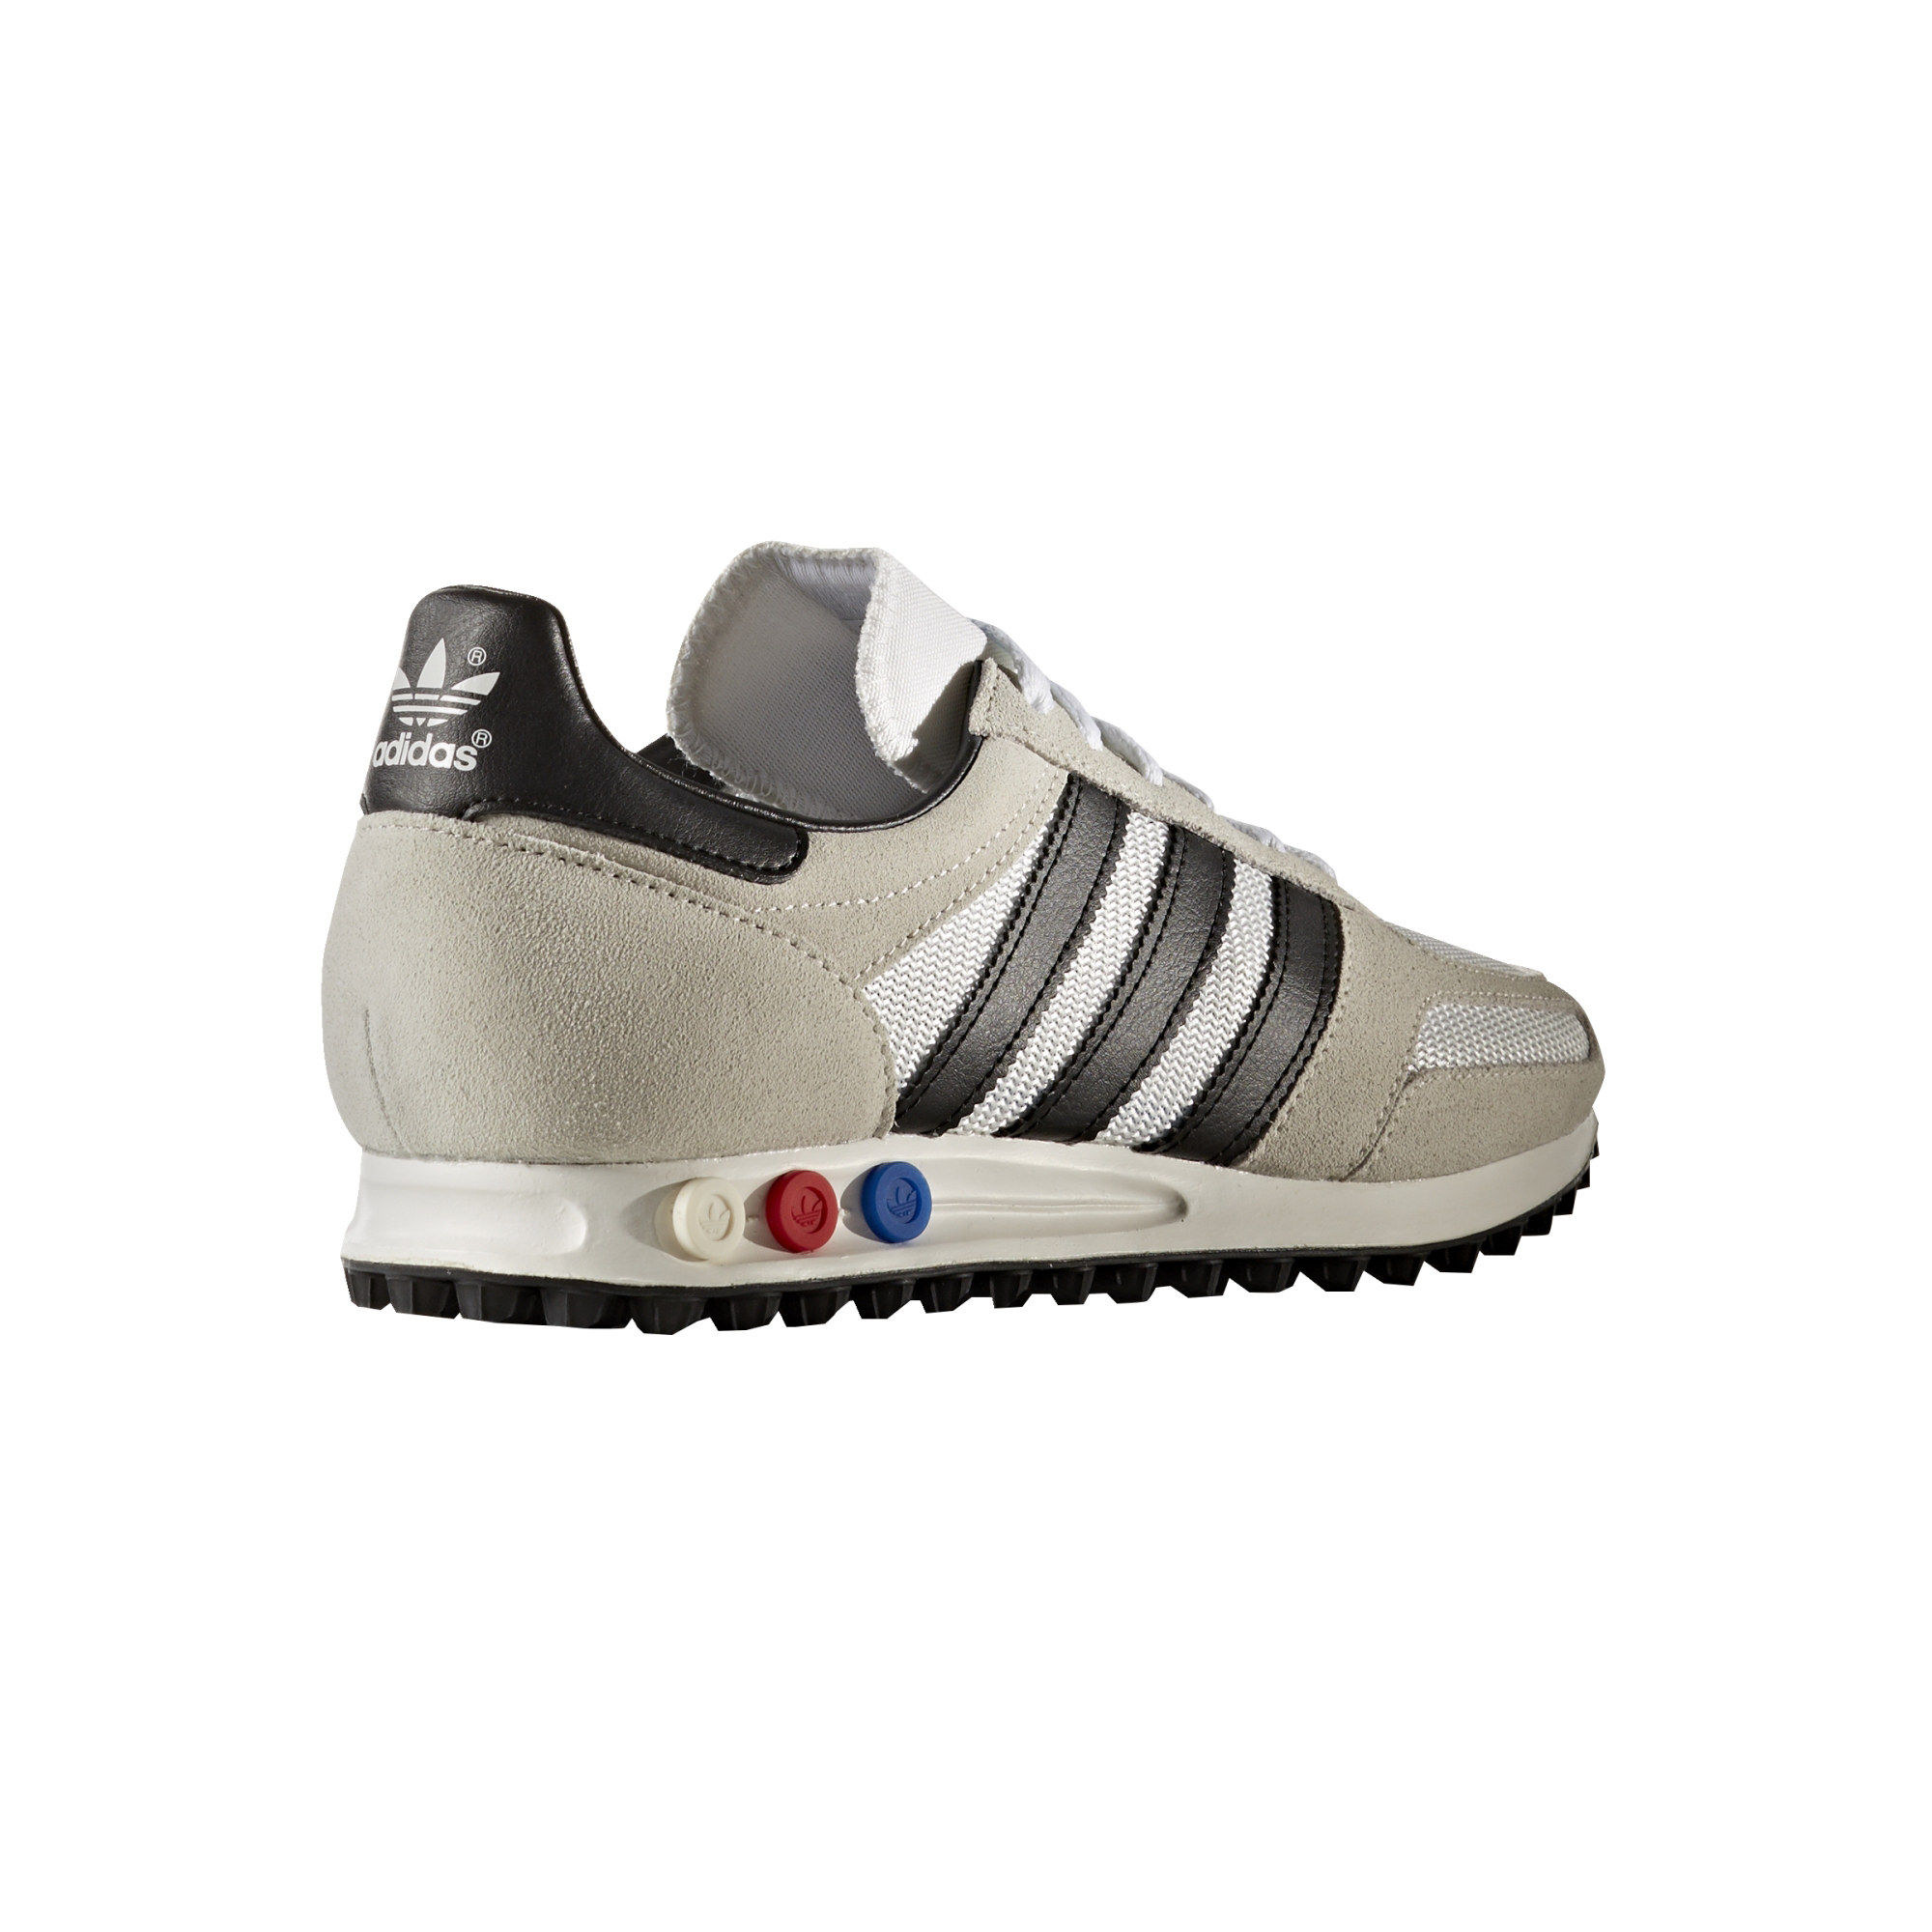 Adidas Trainer OG (vintage white/core black/clear b